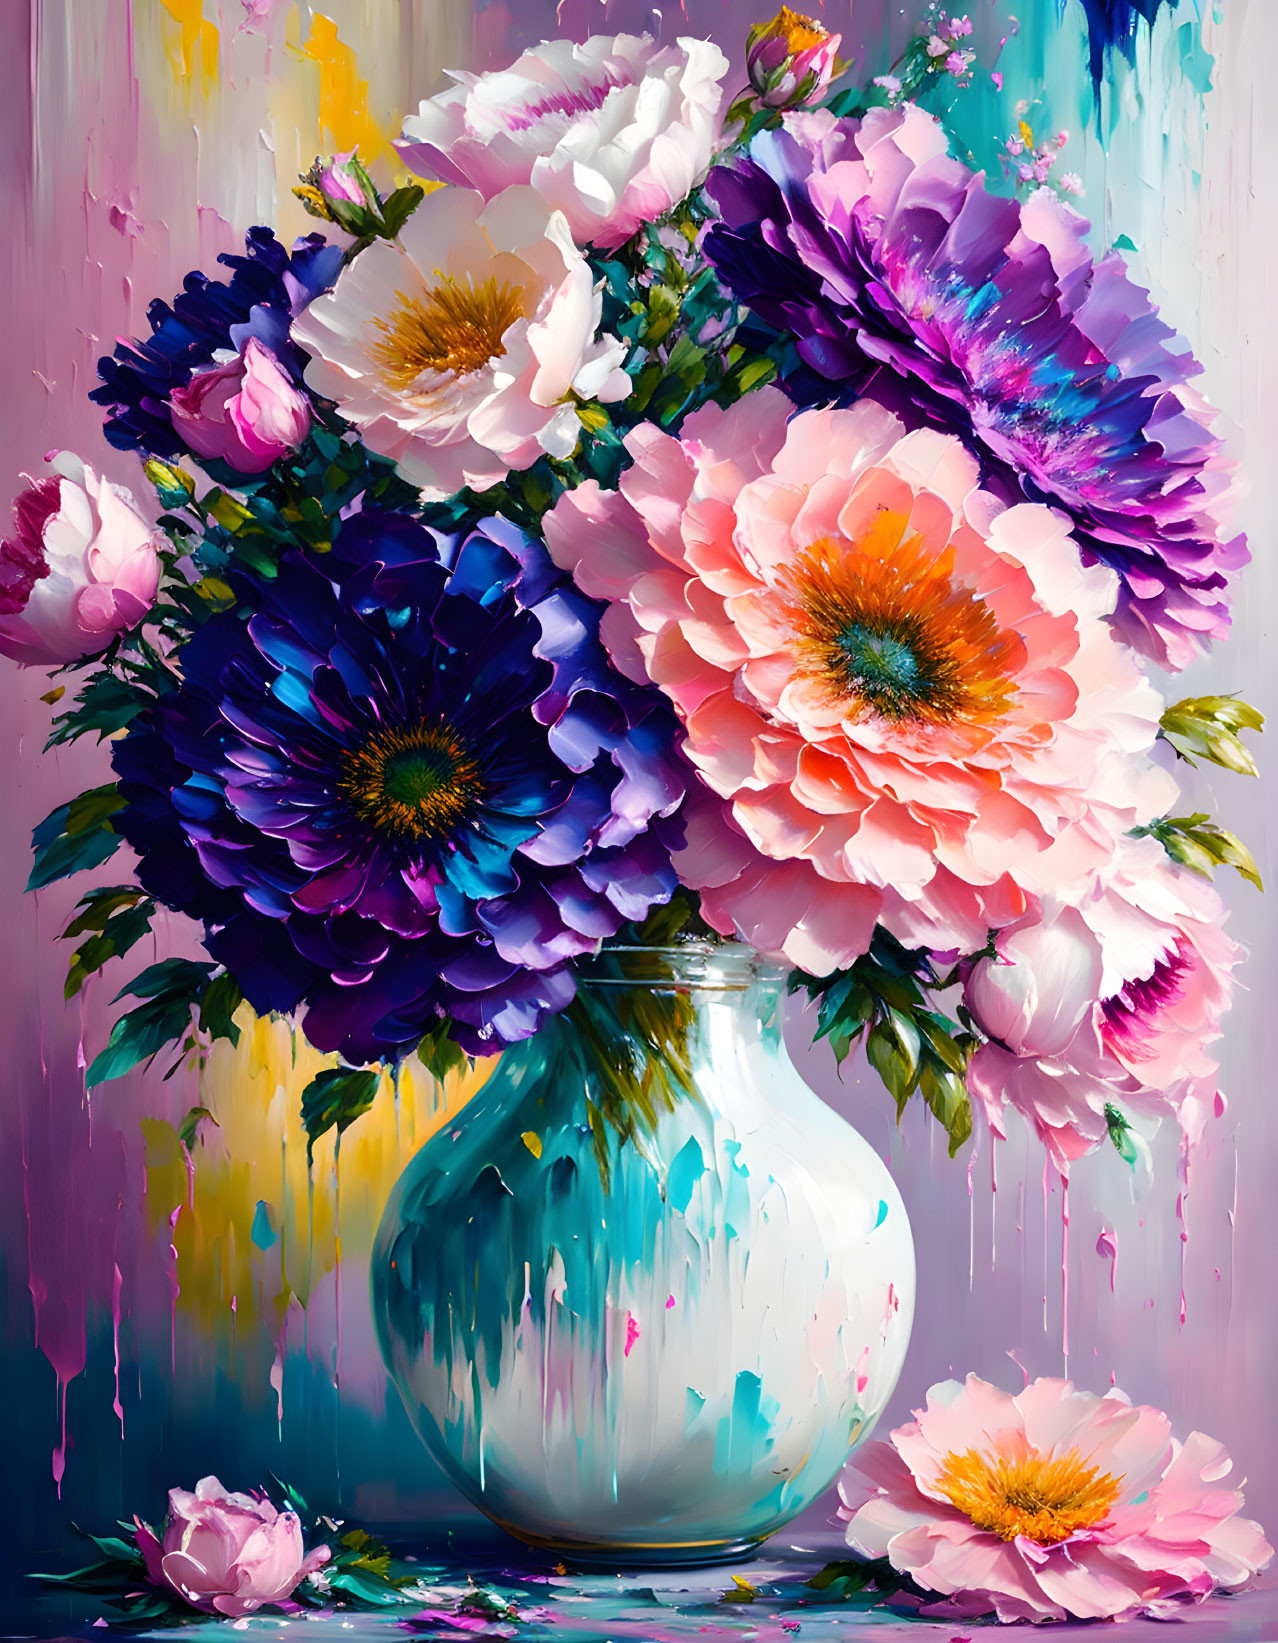 Dream of paint. Vase of flowers